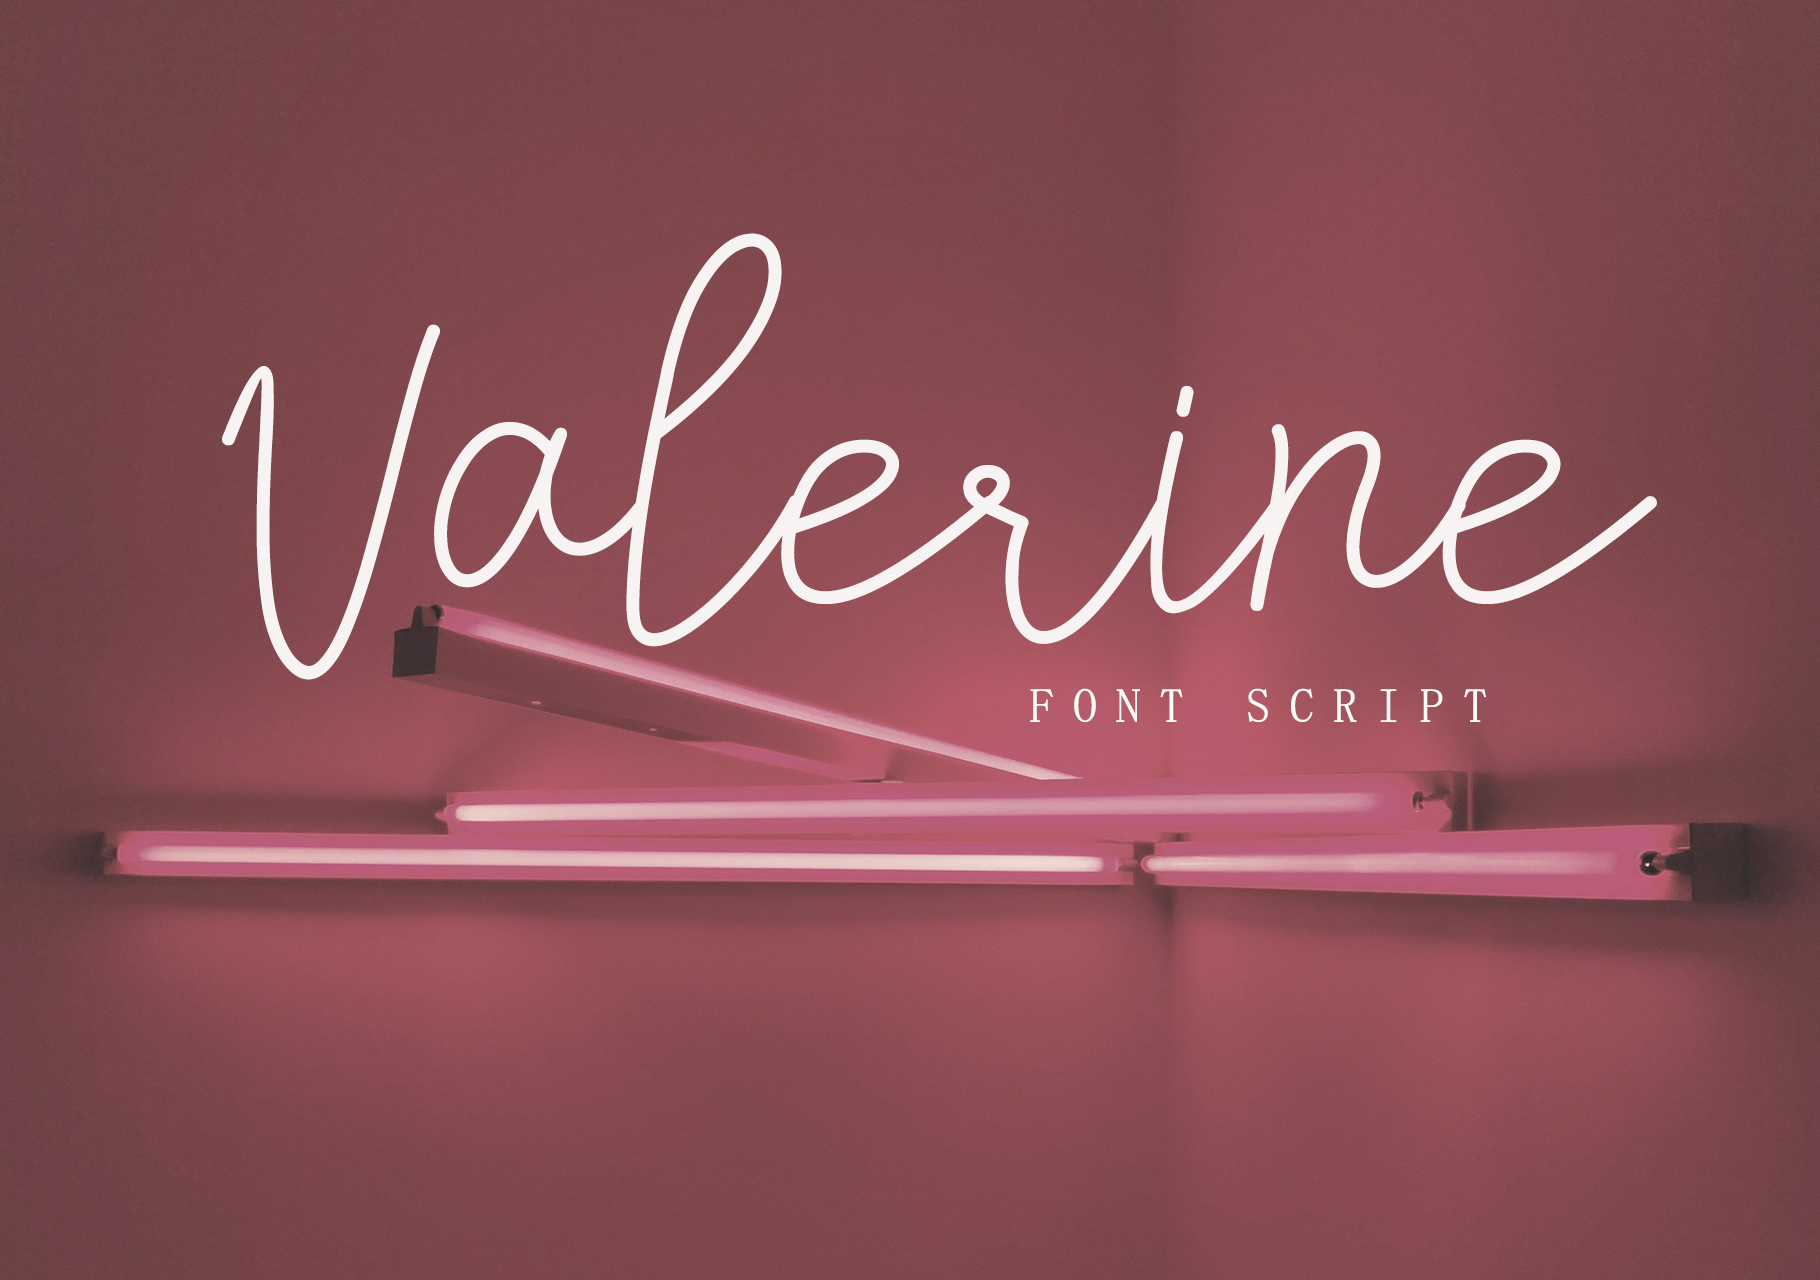 Valerine